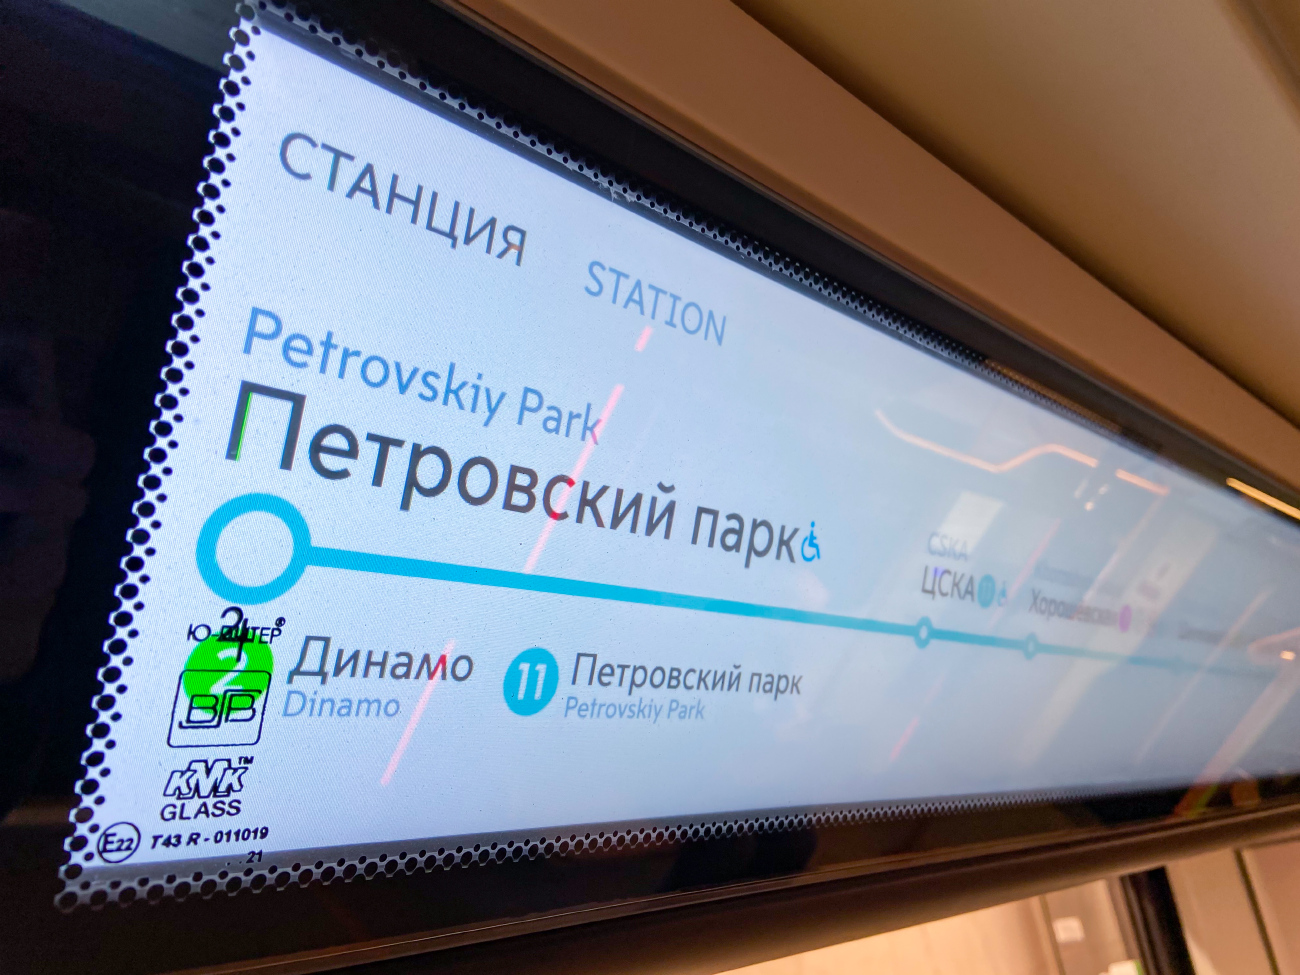 Moscow — Metro — Maps of Individual Lines; Moscow — Metropolitain — [11] Bol'shaya Koltsevaya Line